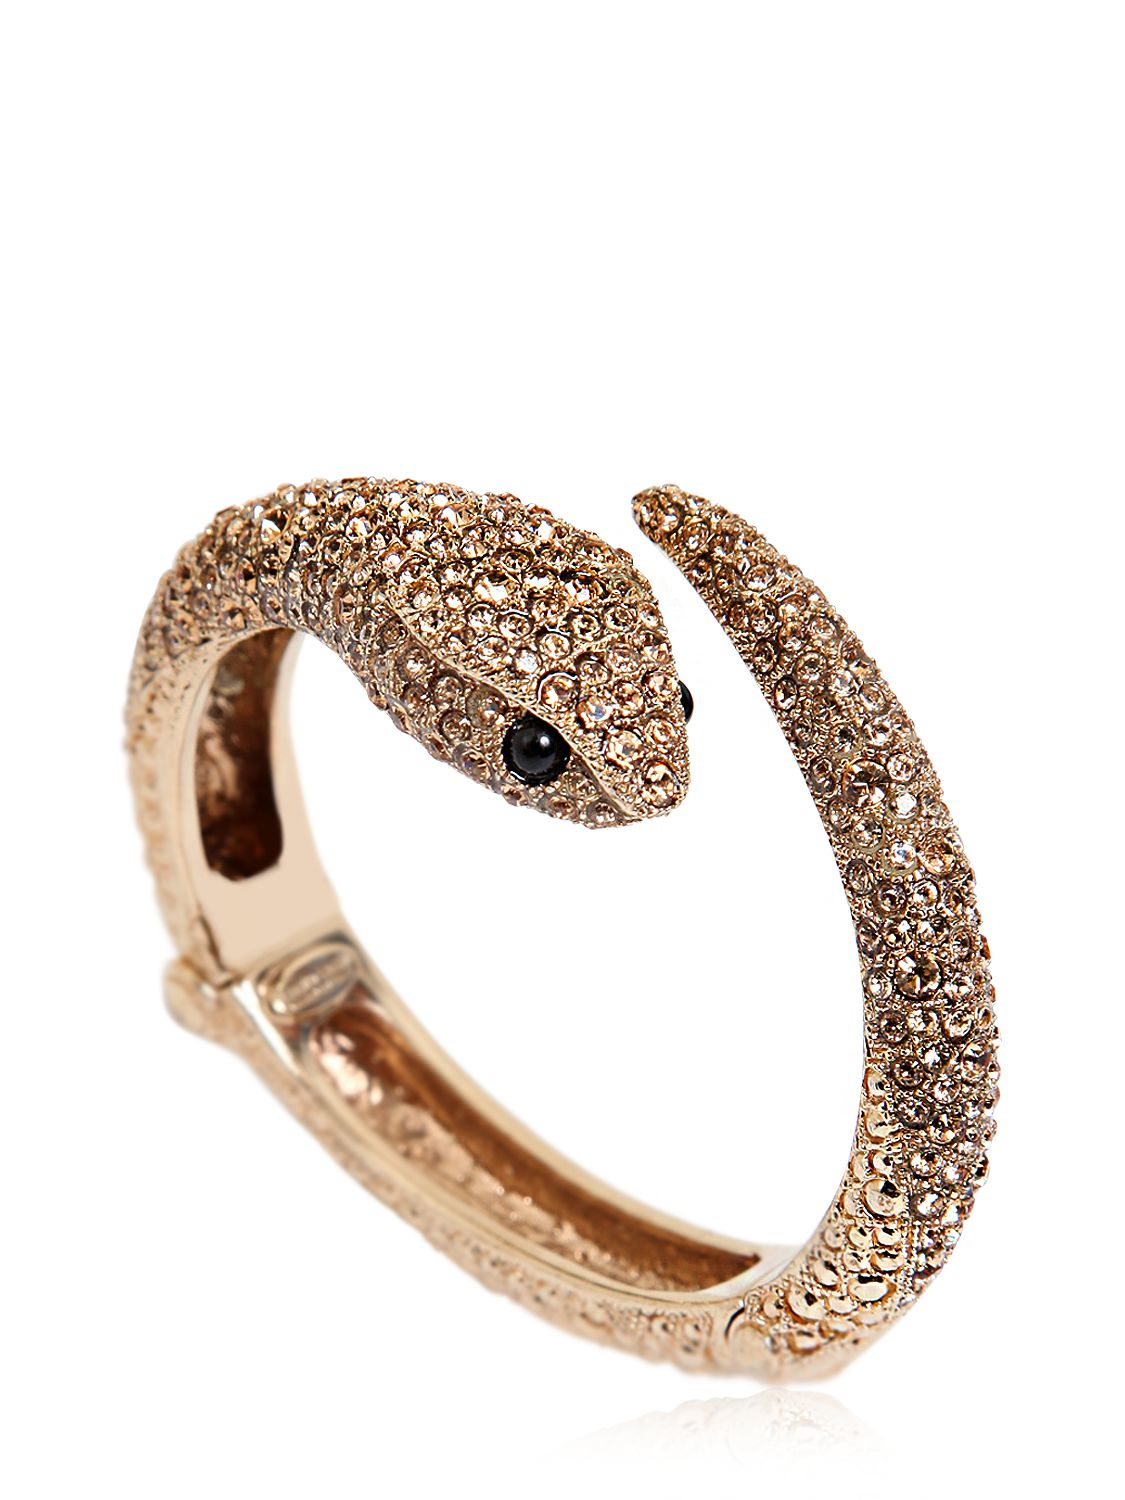 Lyst - Roberto Cavalli Embellished Snake Bracelet in Metallic